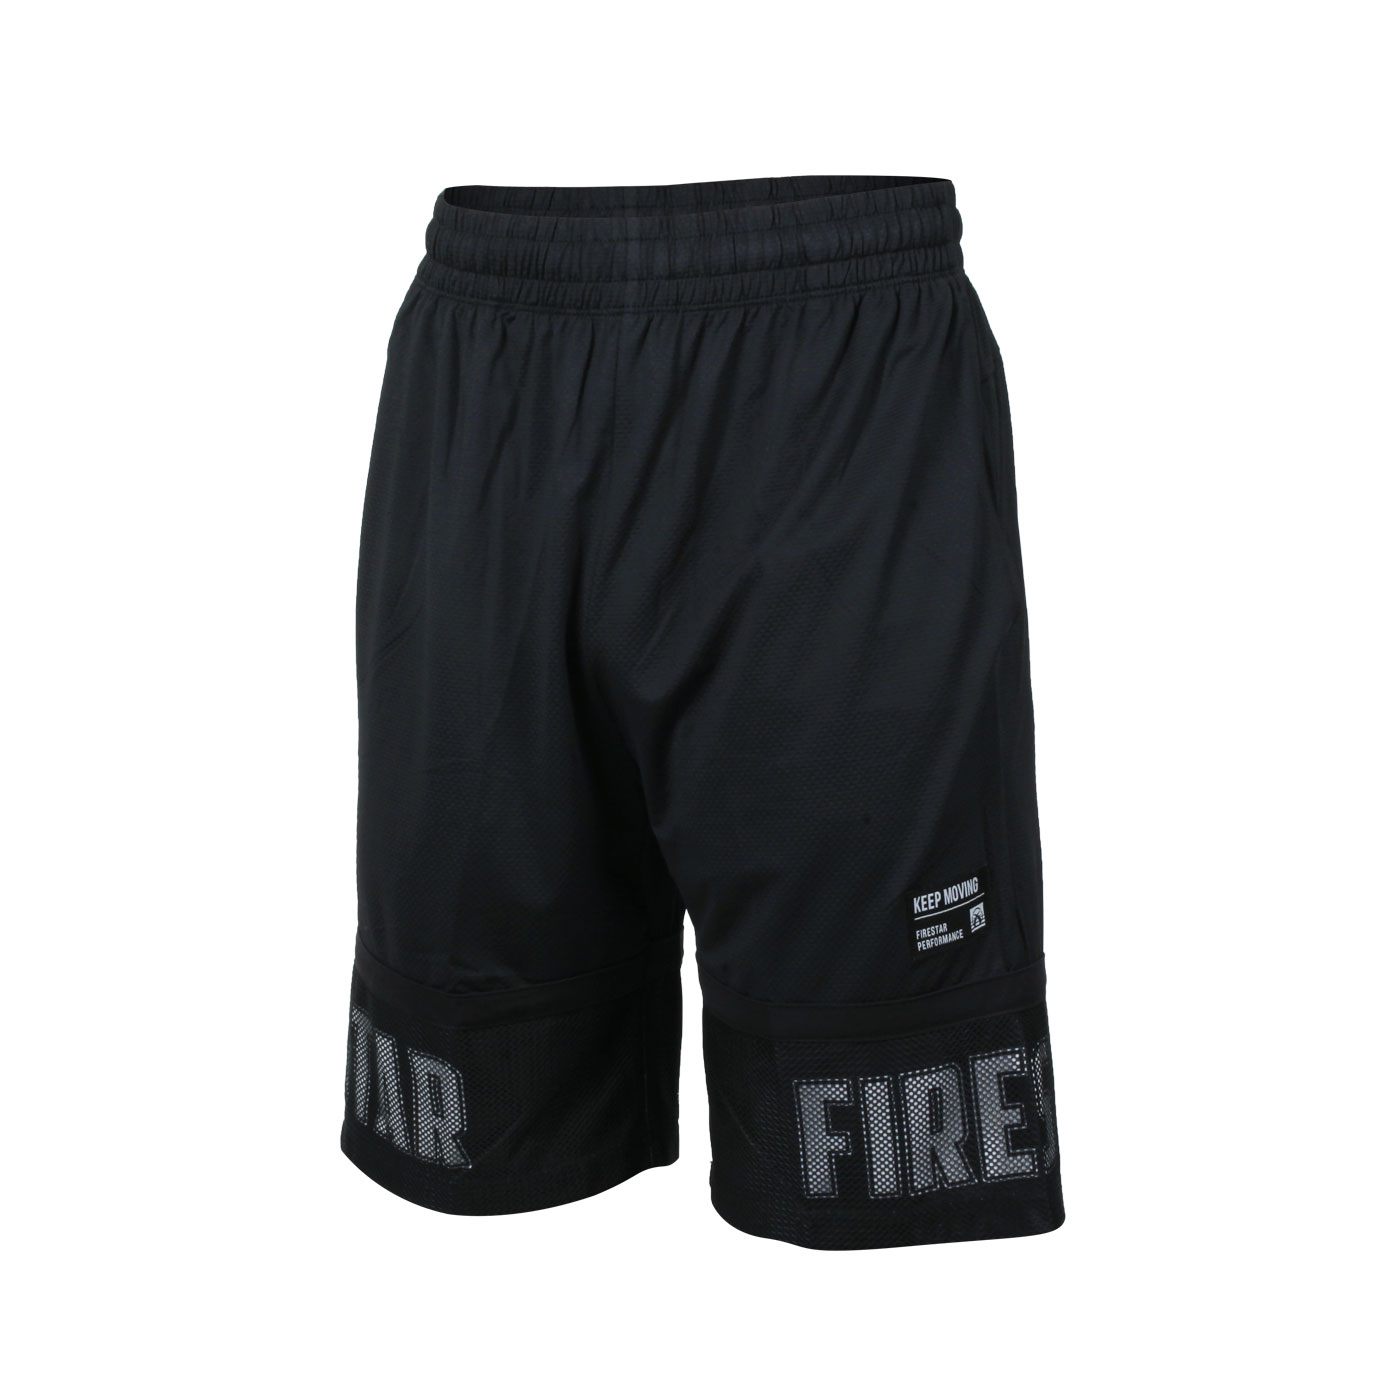 FIRESTAR 男款彈性訓練籃球短褲 B2006-10 - 黑白